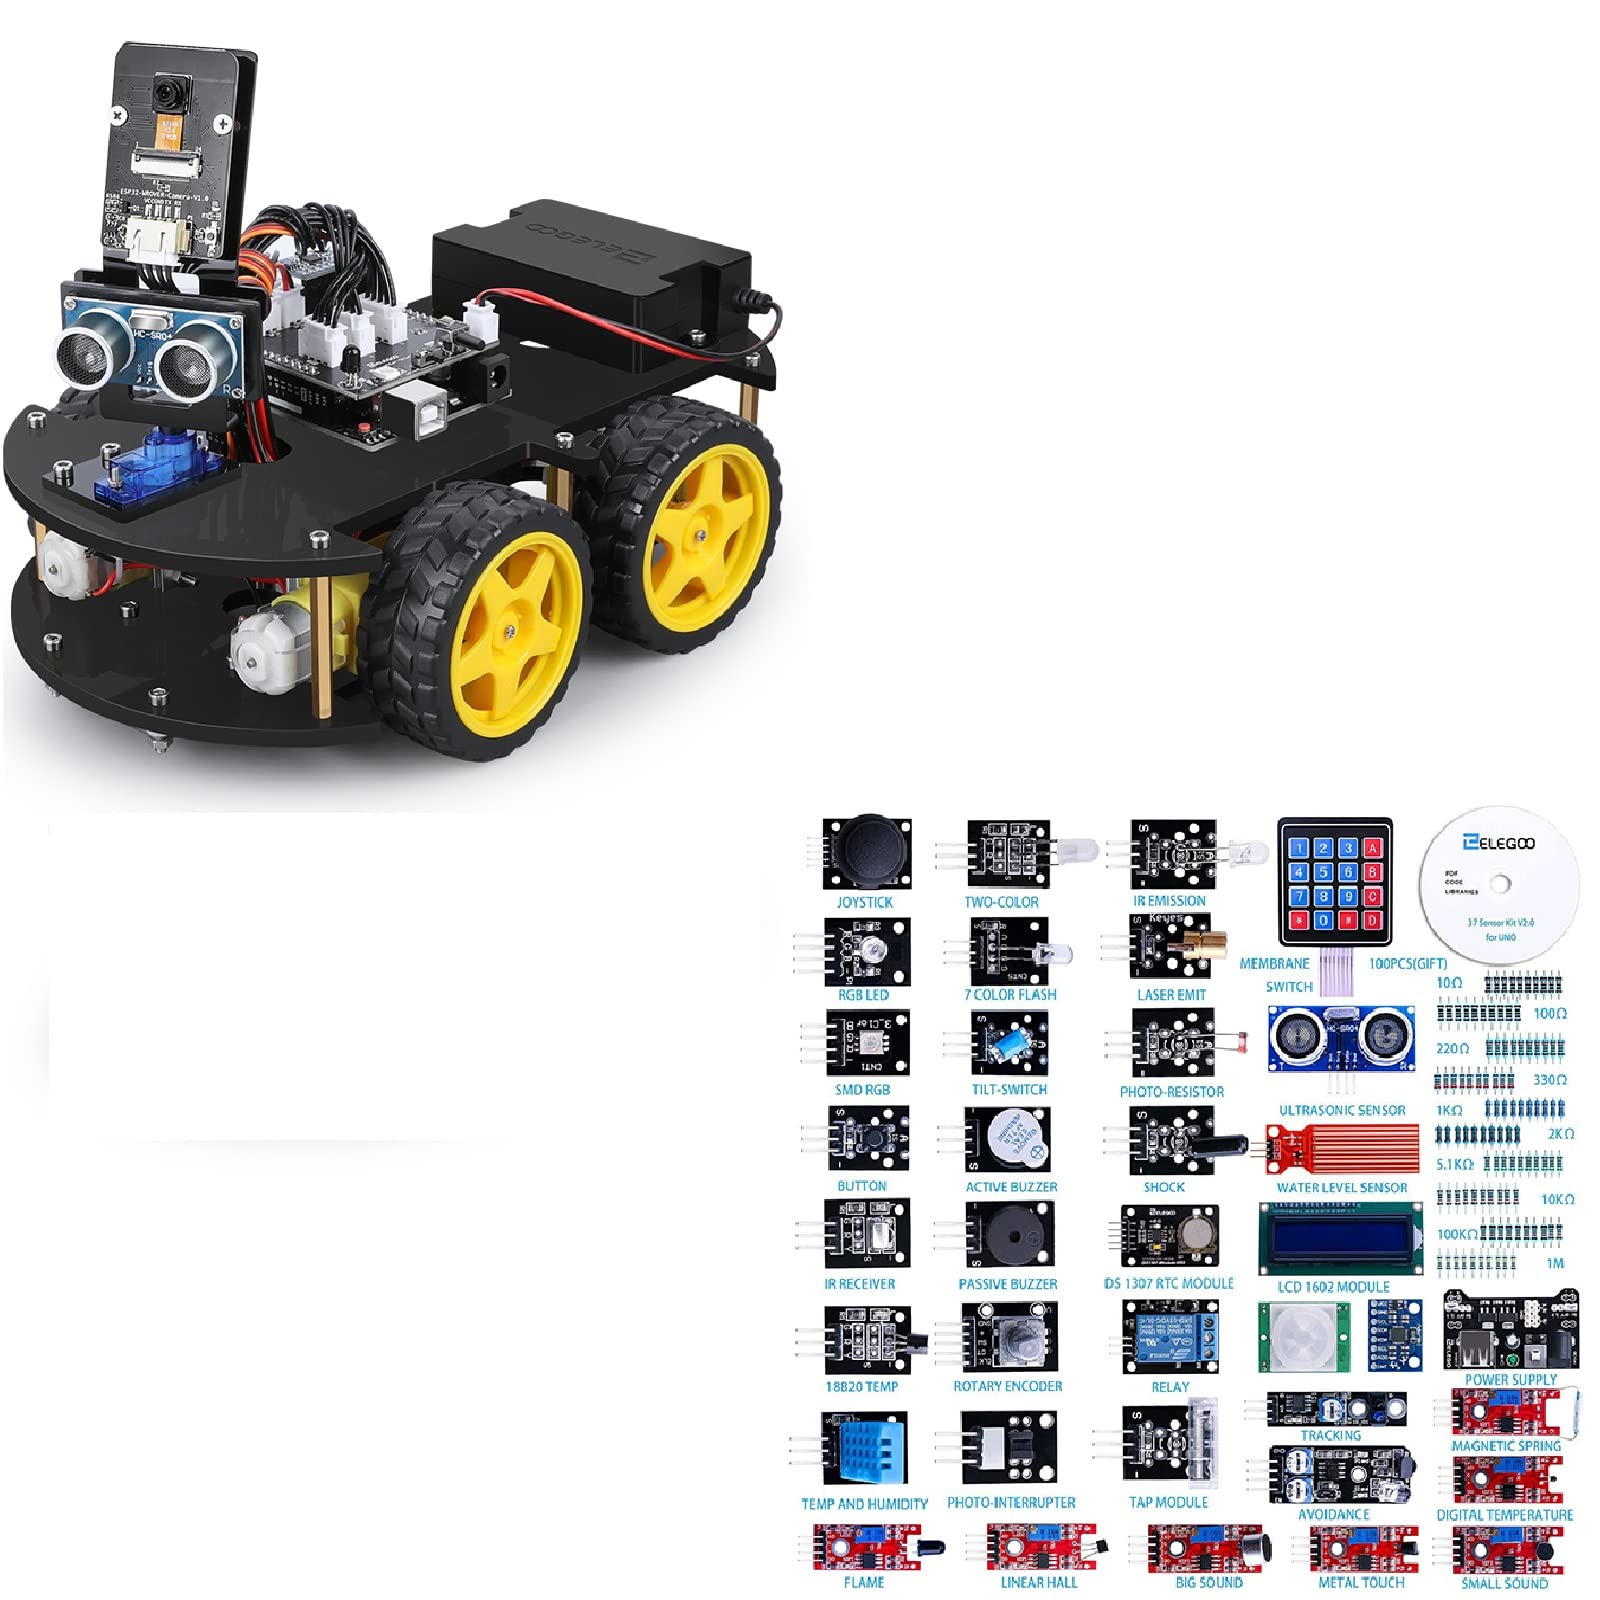 ELEGOO UNO R3 Project Smart Robot Car Kit & ELEGOO Upgraded 37 in 1 Sensor Modules Kit